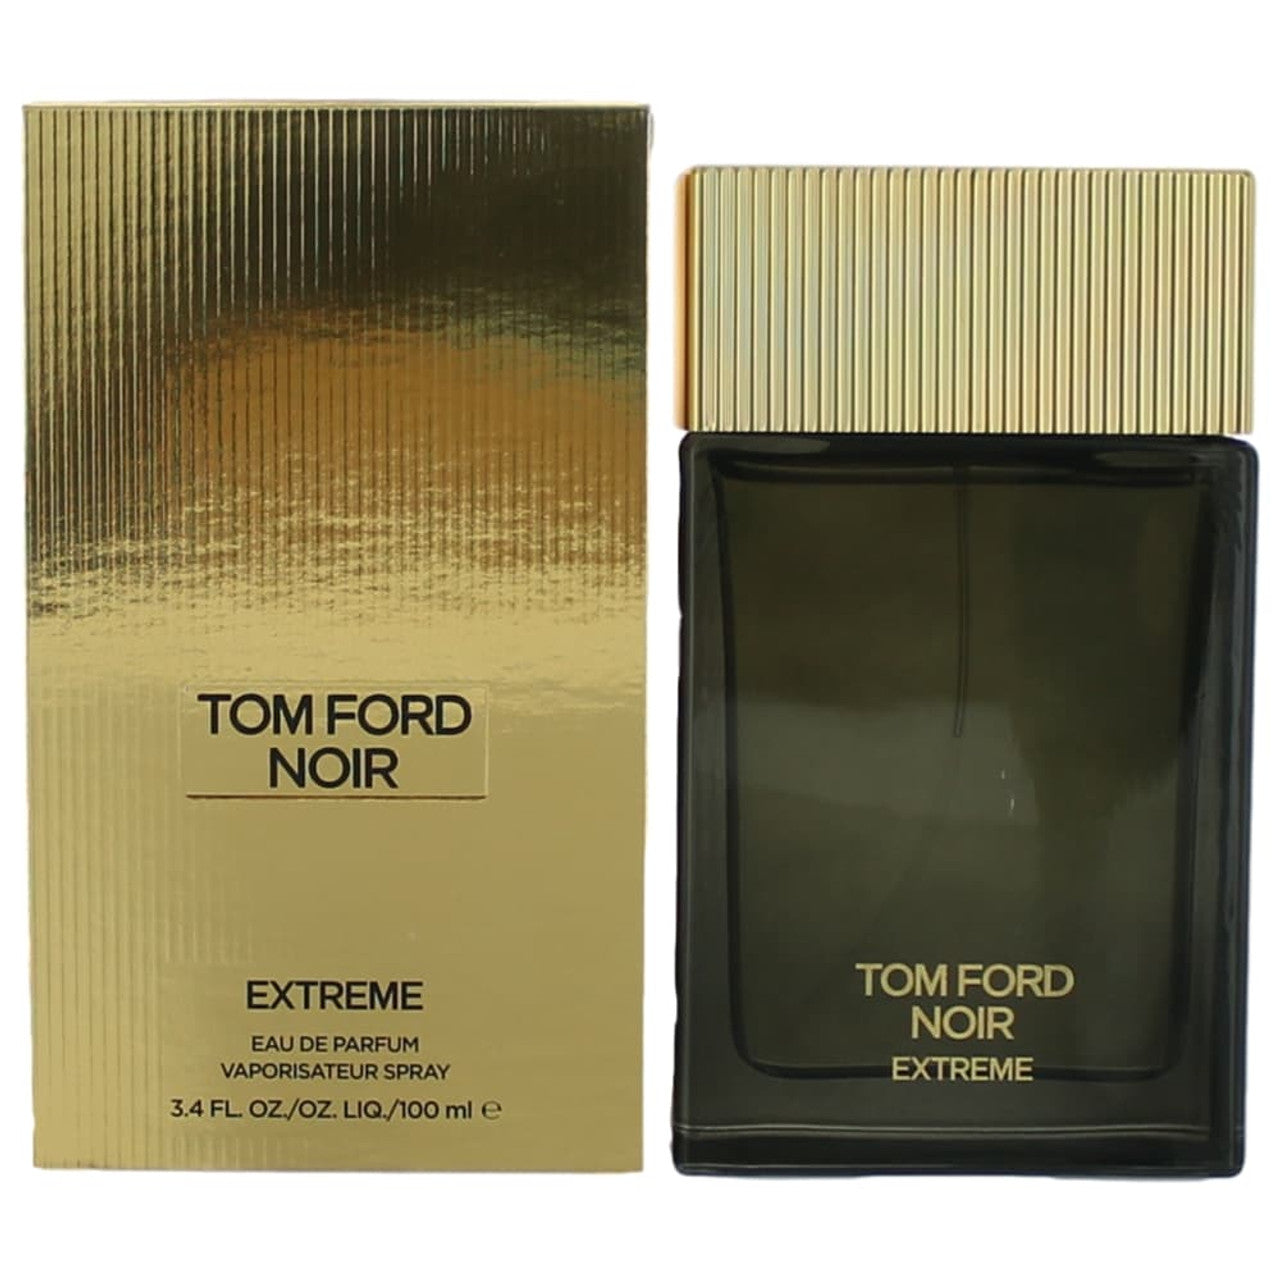 3.4 oz bottle of Tom Ford Noir Extreme